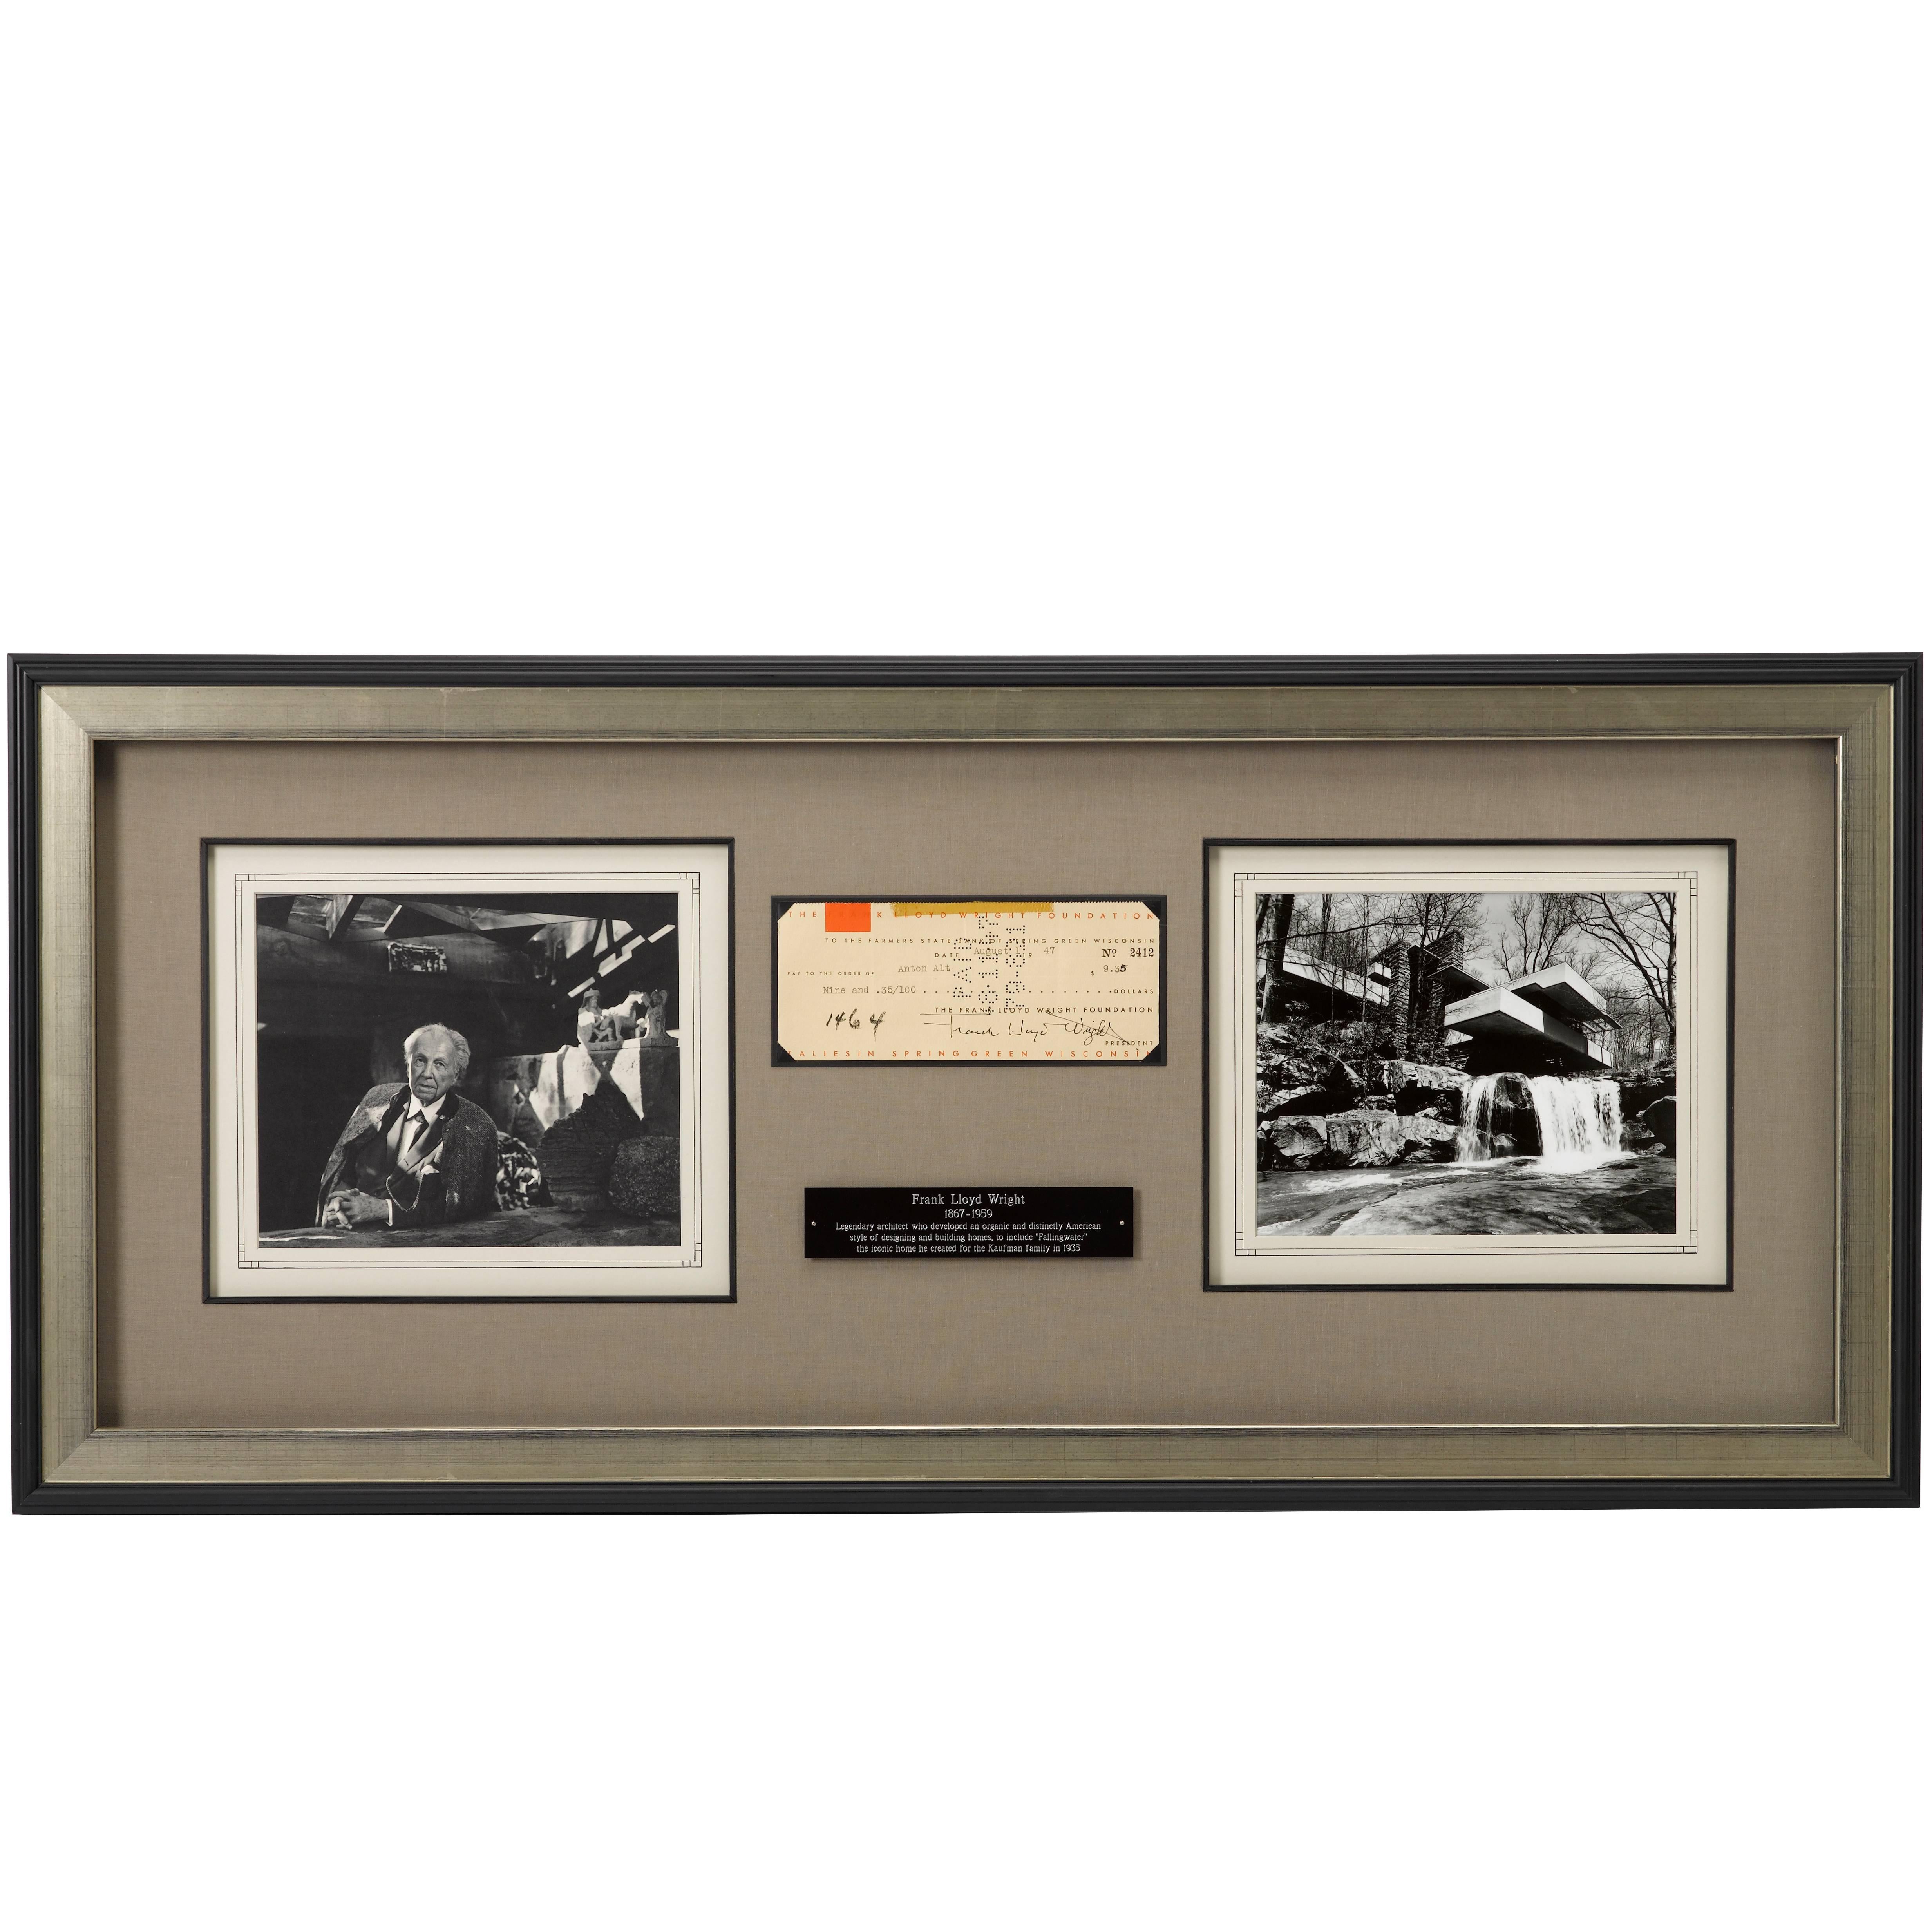 Frank Lloyd Wright Signed Vintage Check, circa 1947